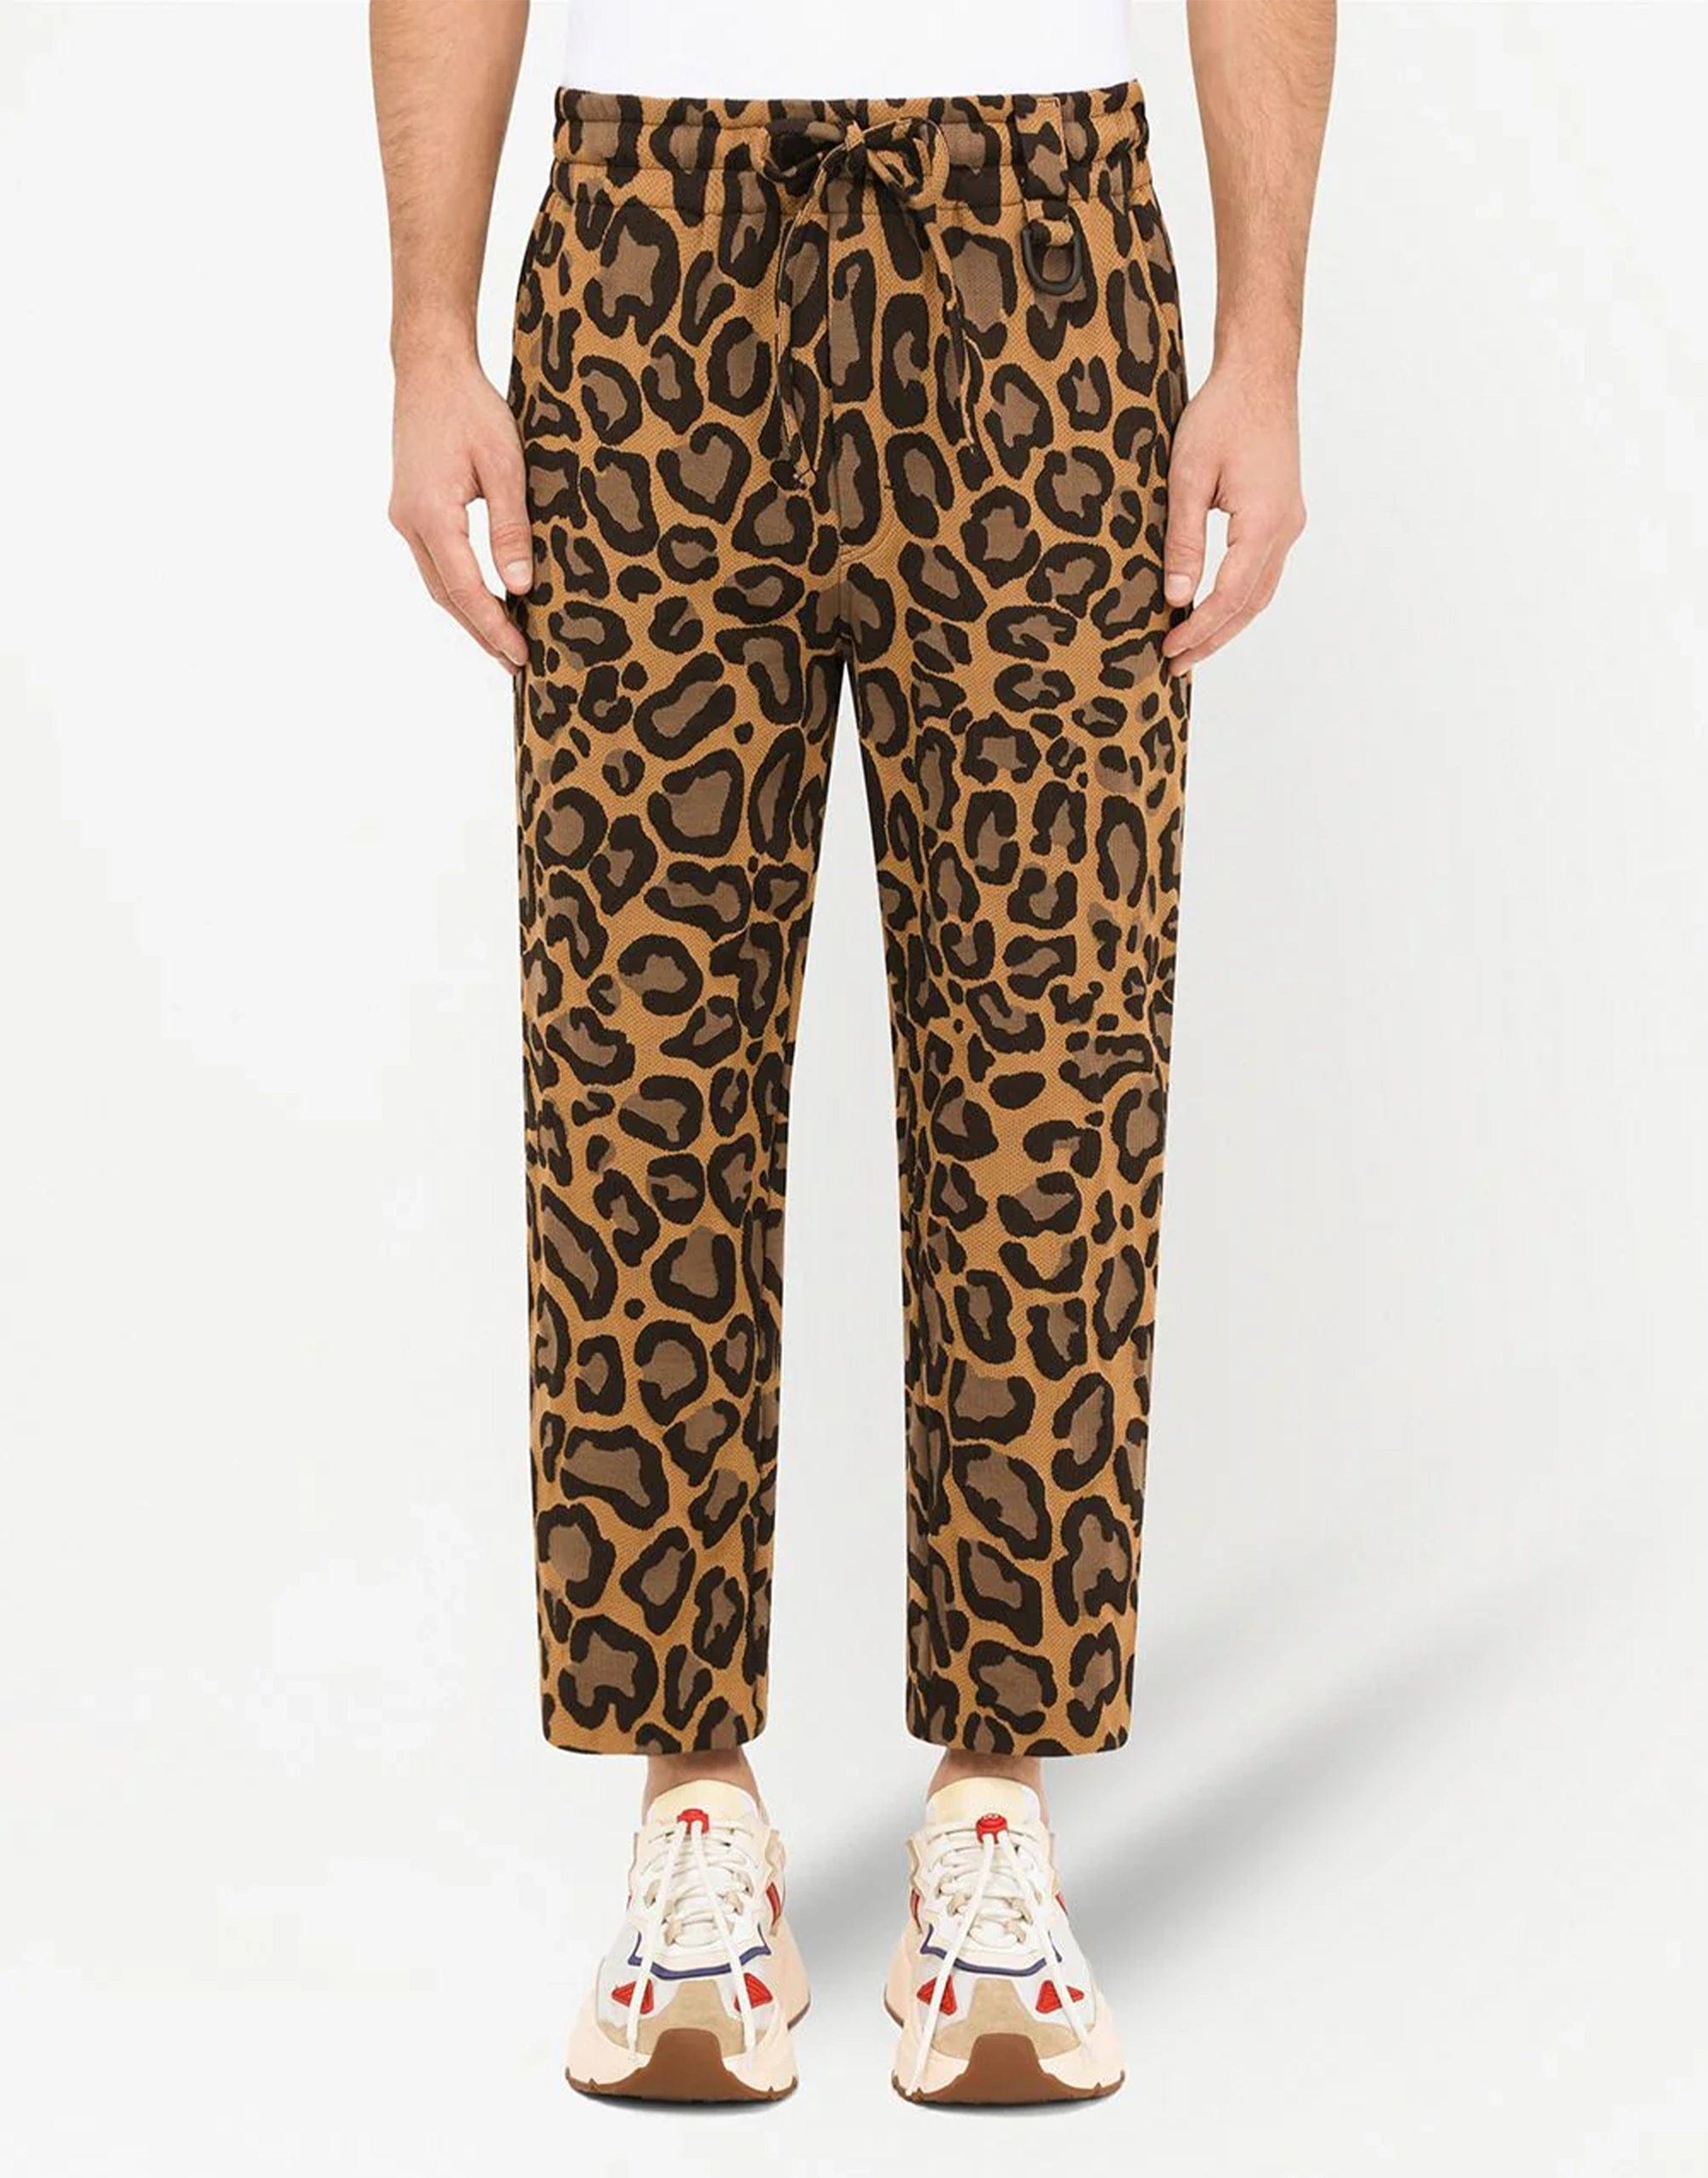 Jacquard Jogging Pants With Leopard Design